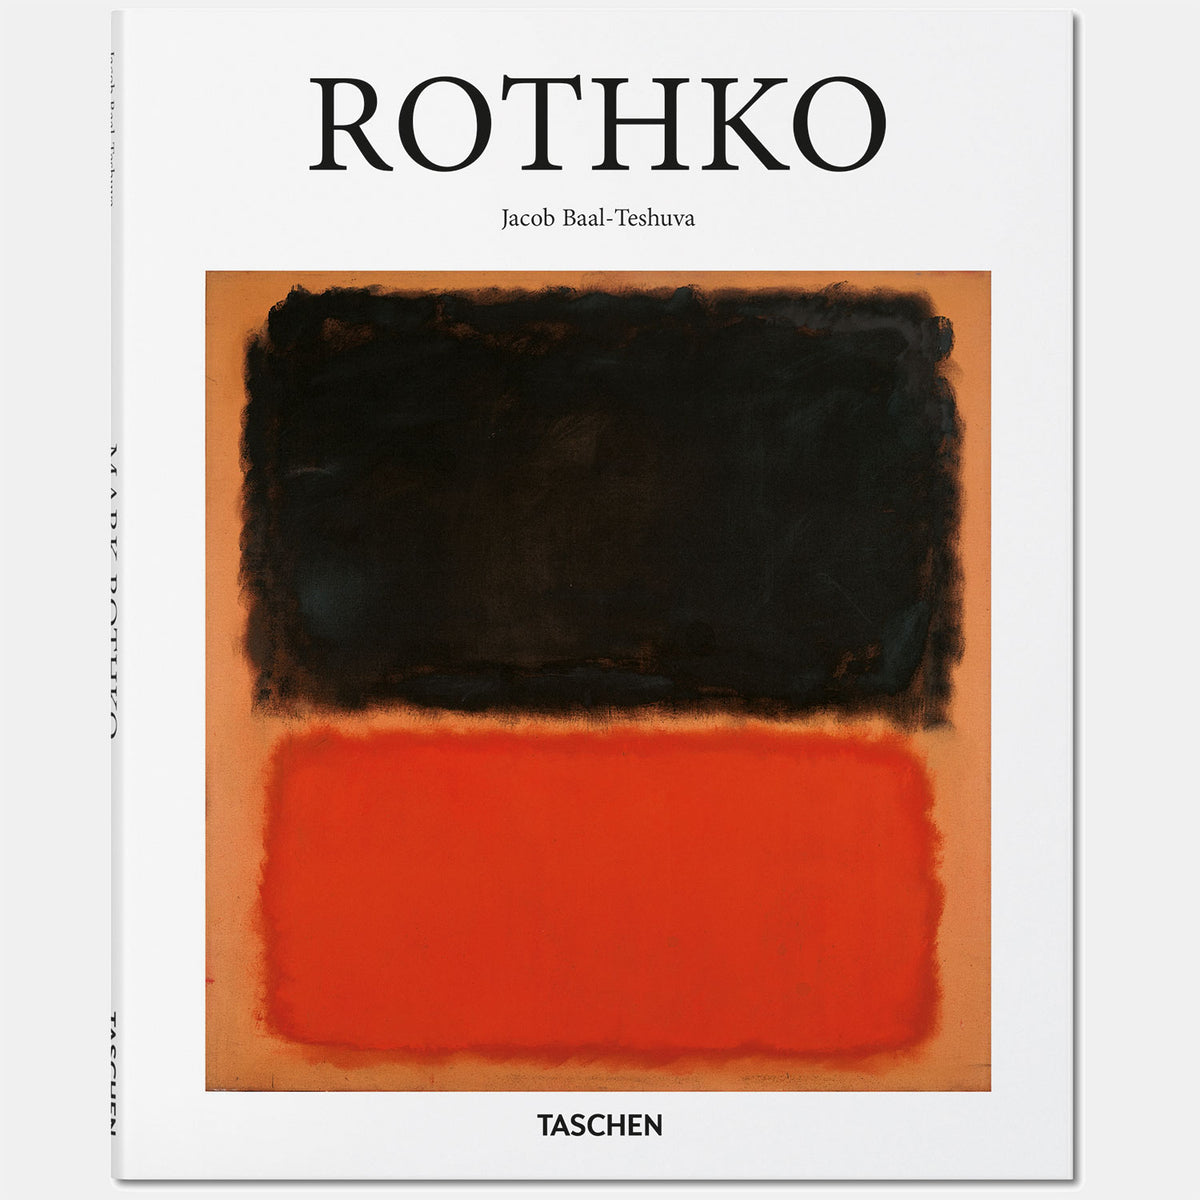 Rothko art and design book by Taschen